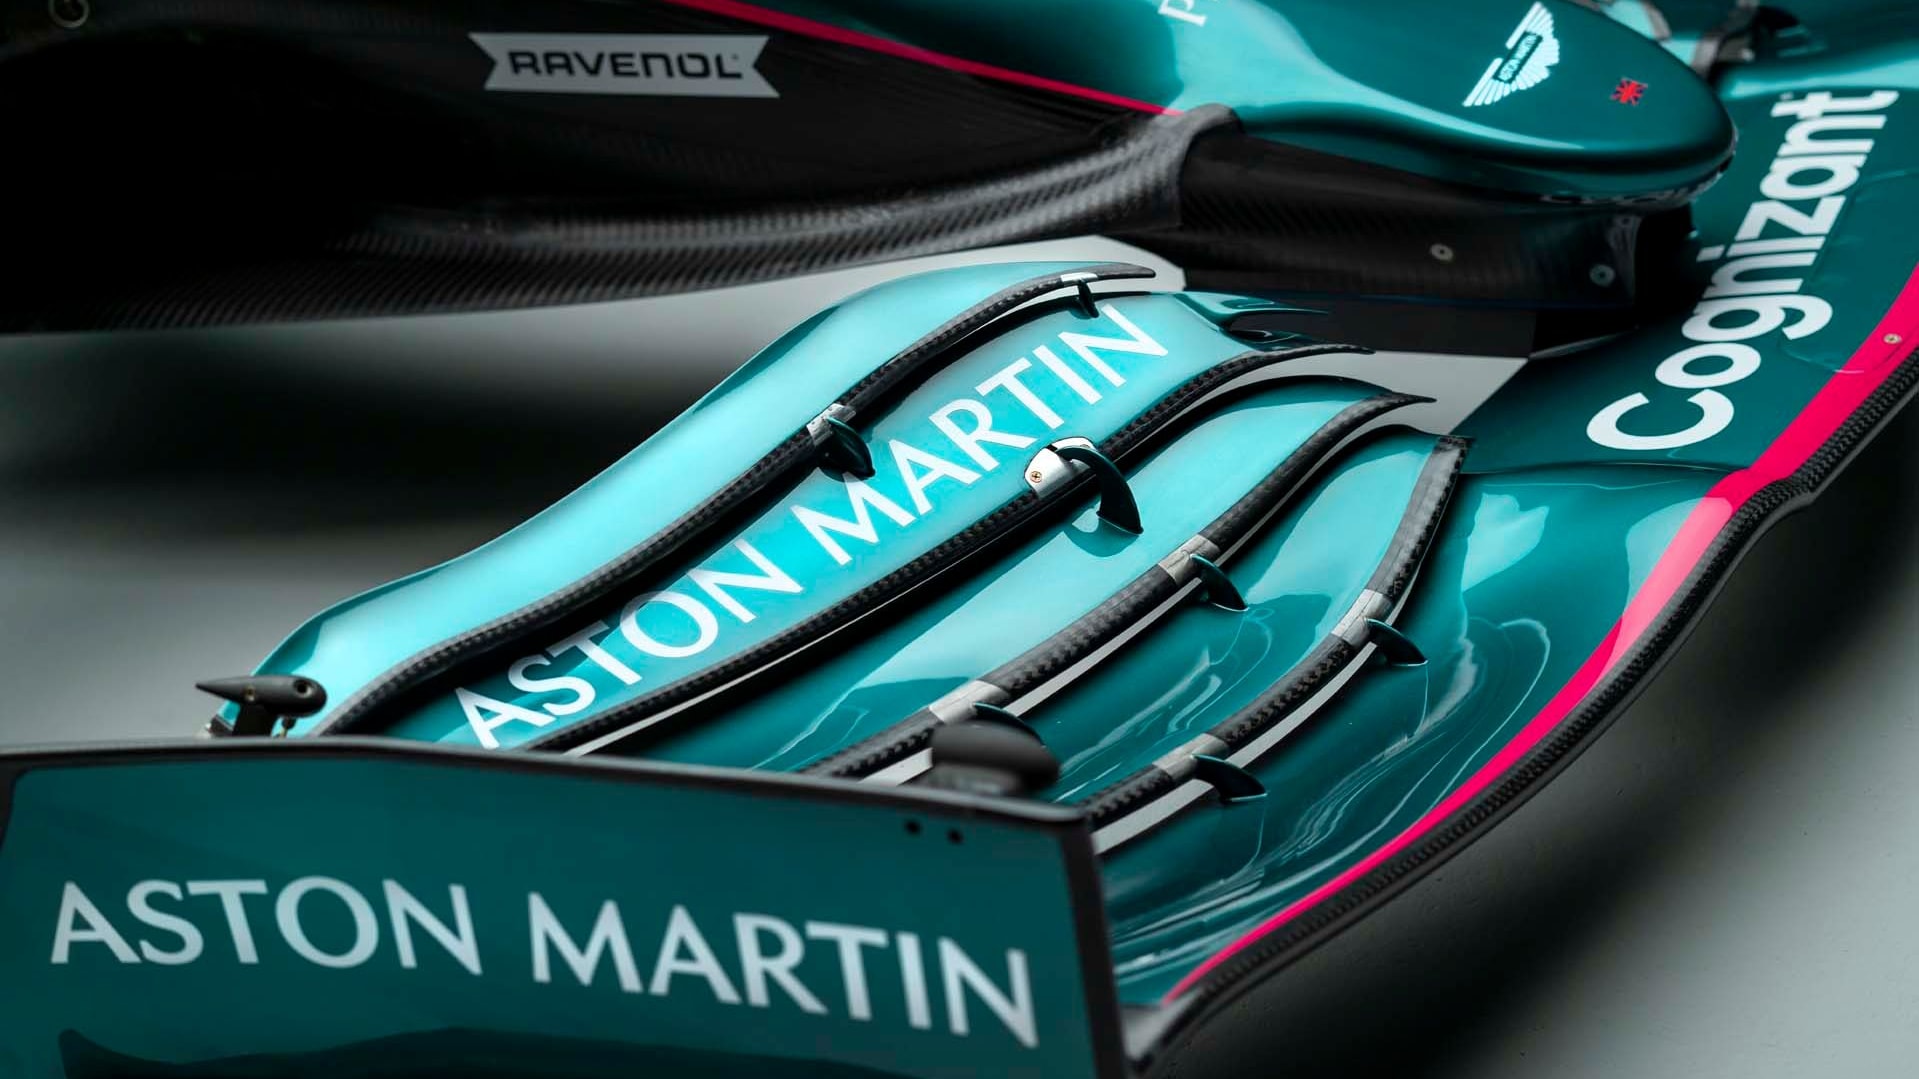 2021 Aston Martin AMR21 Formula One race car